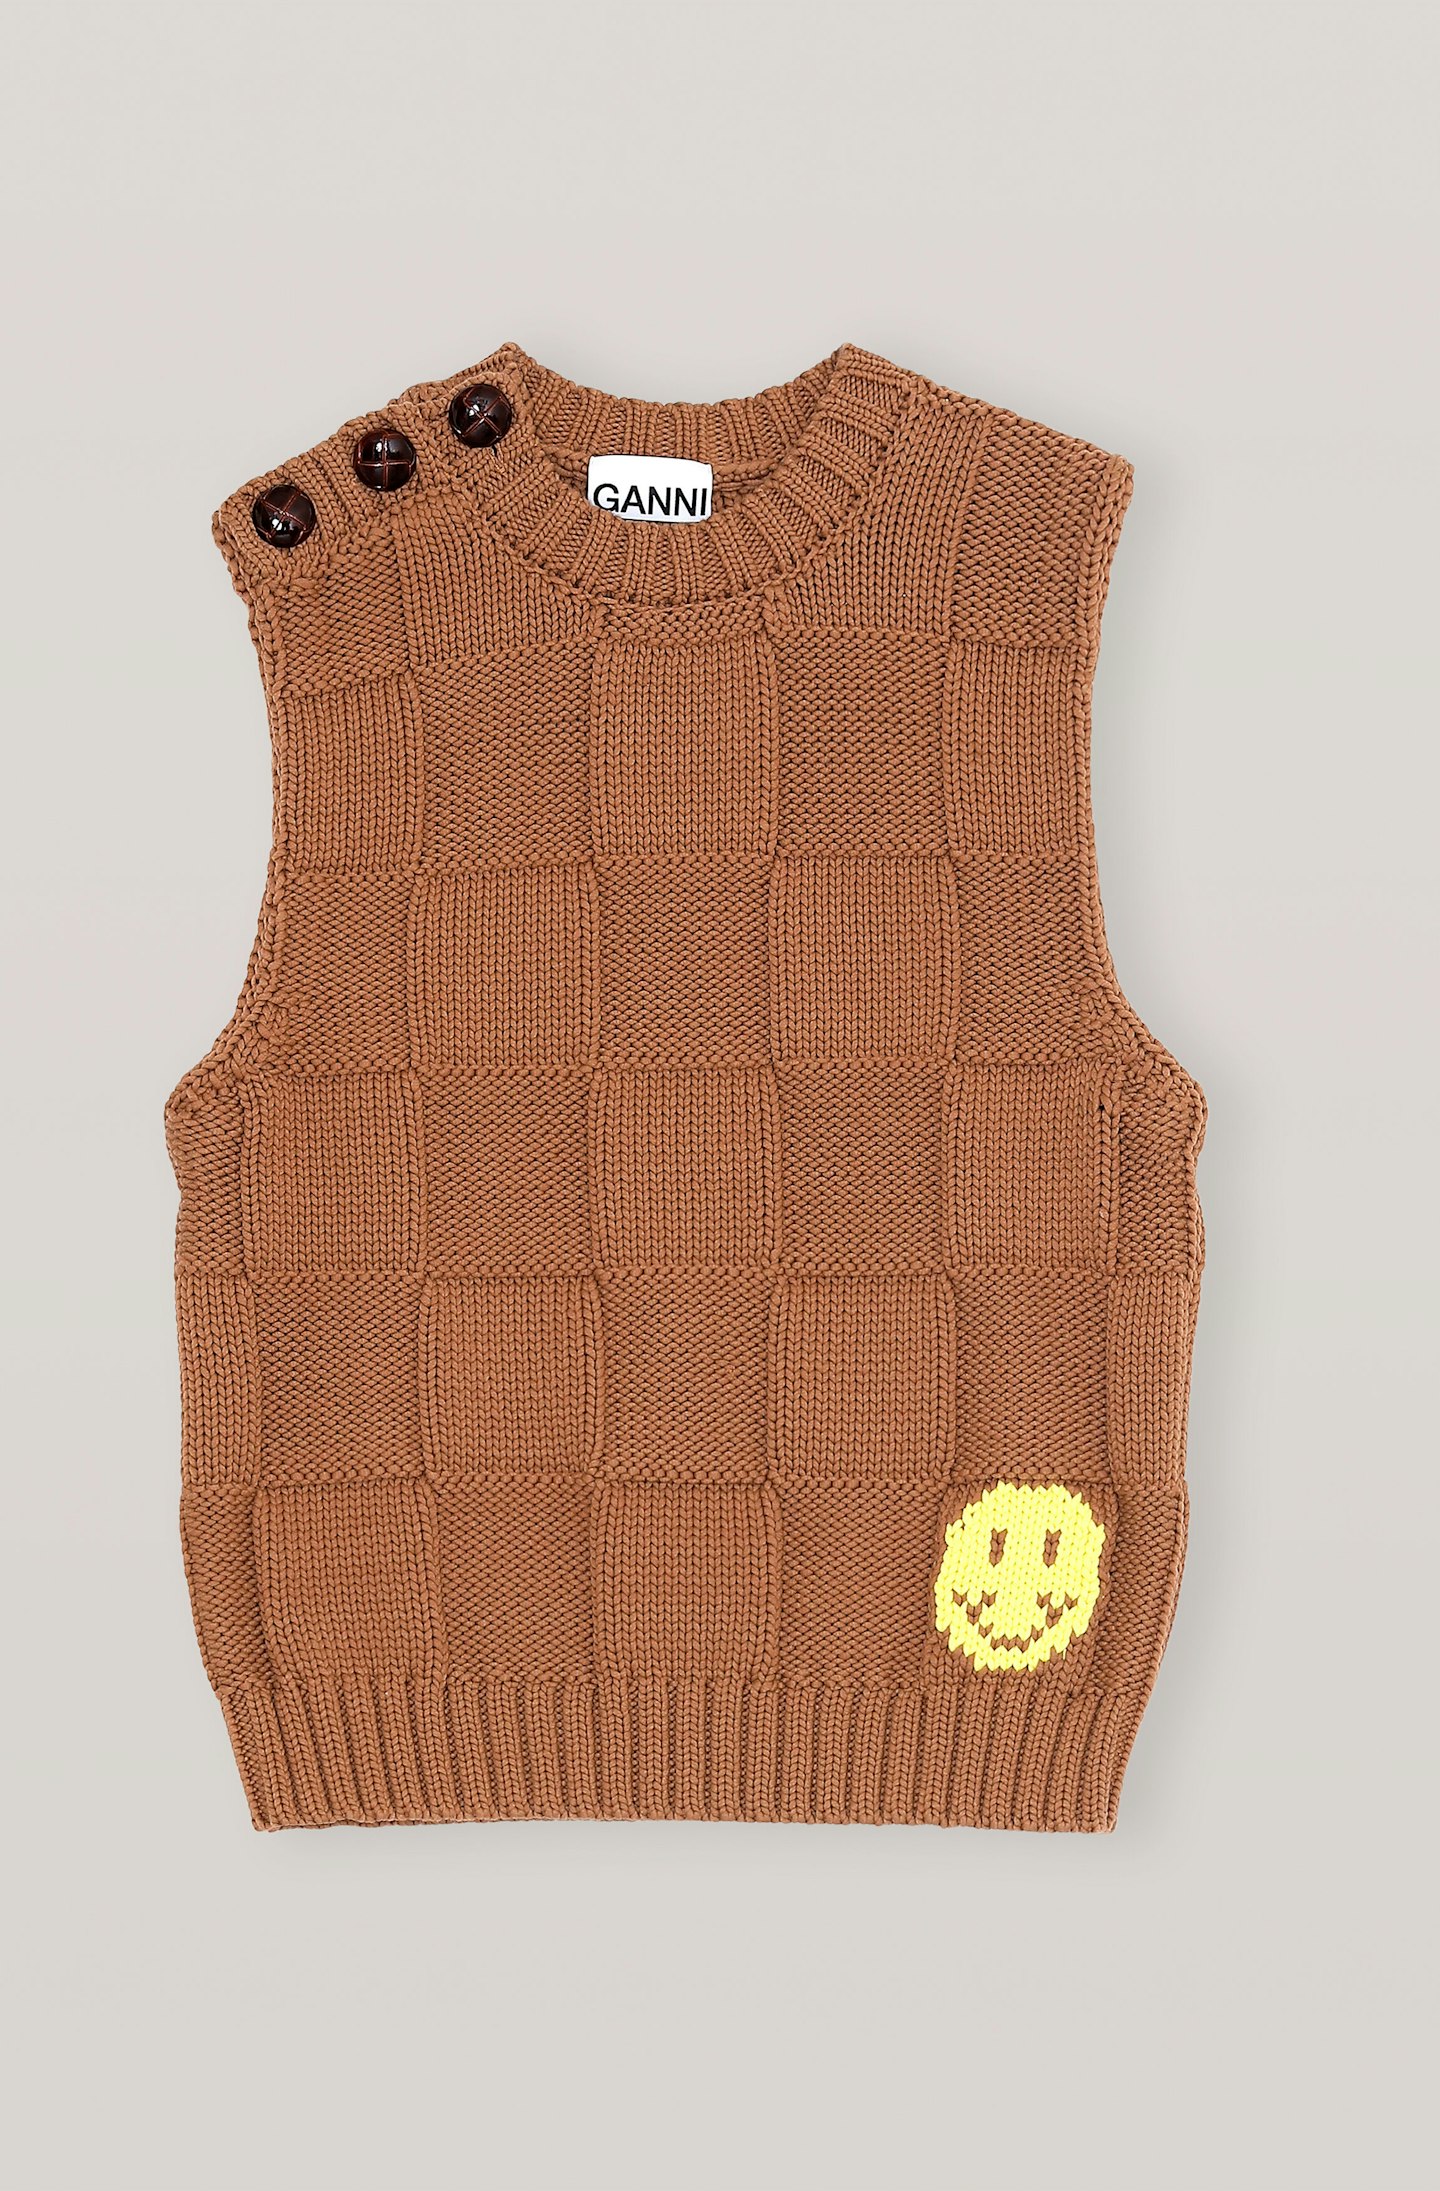 Ganni, Sweater Vest, £175